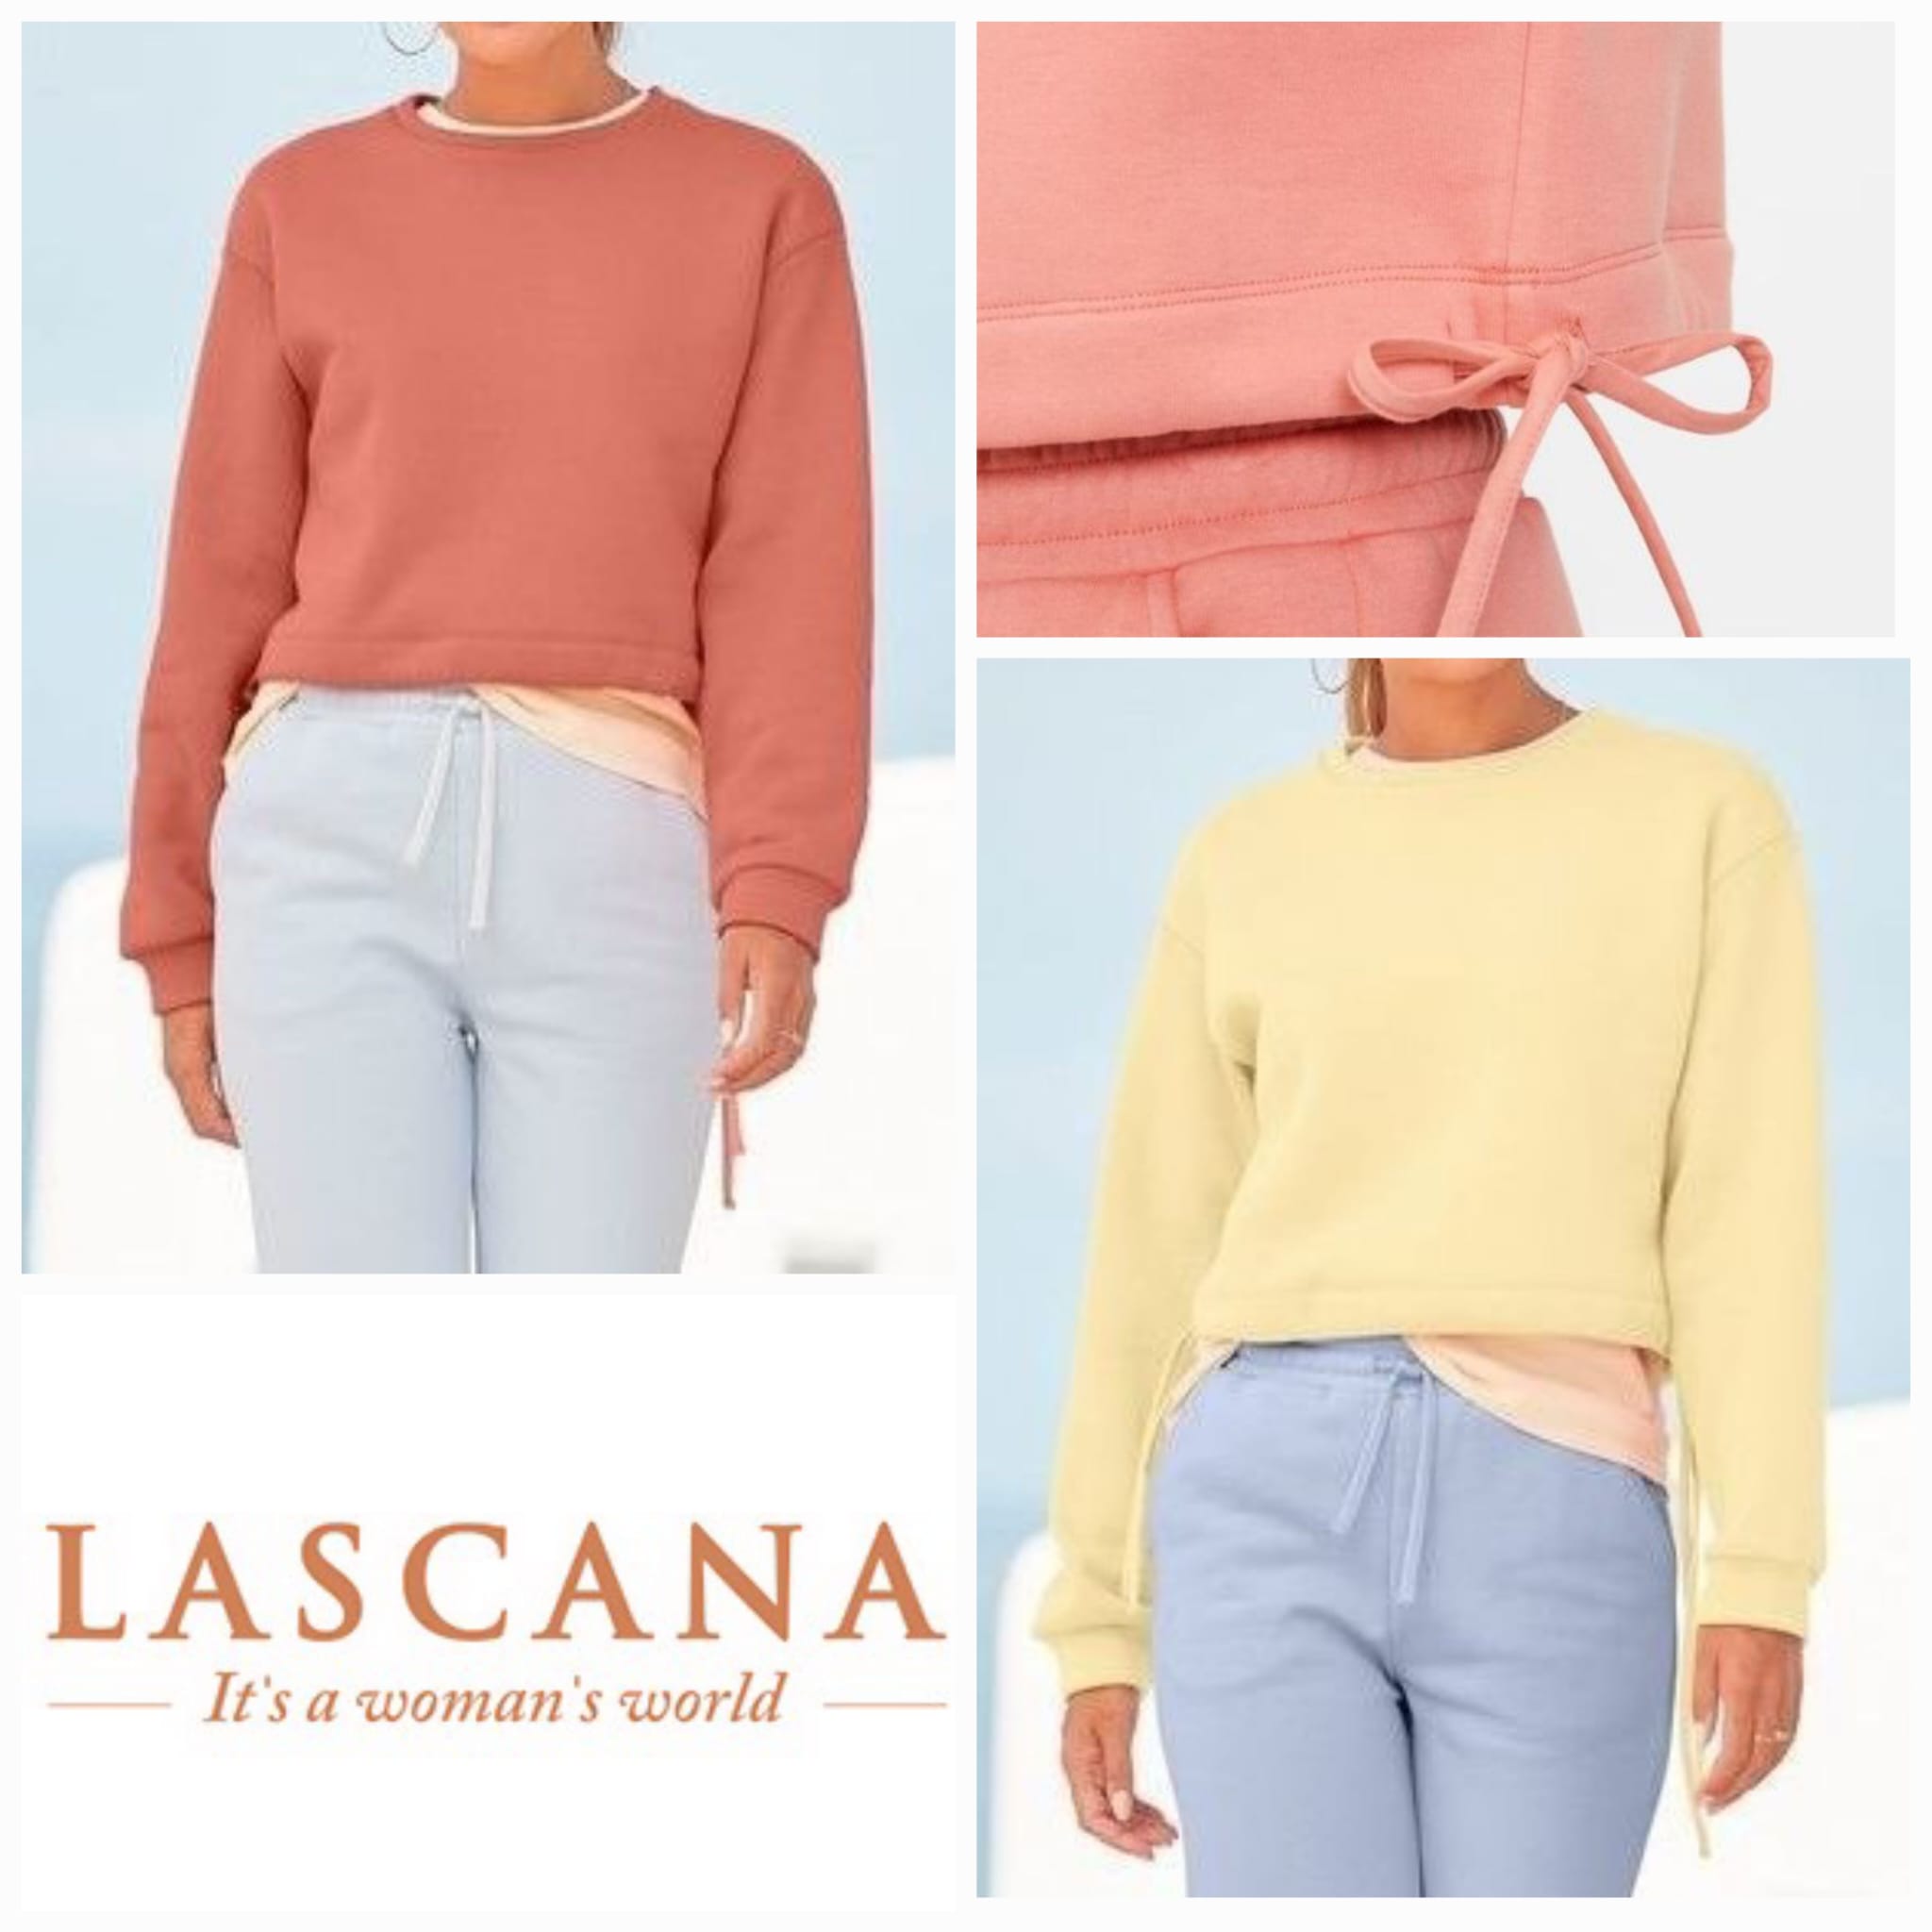 Women's sweatshirts from Lascana